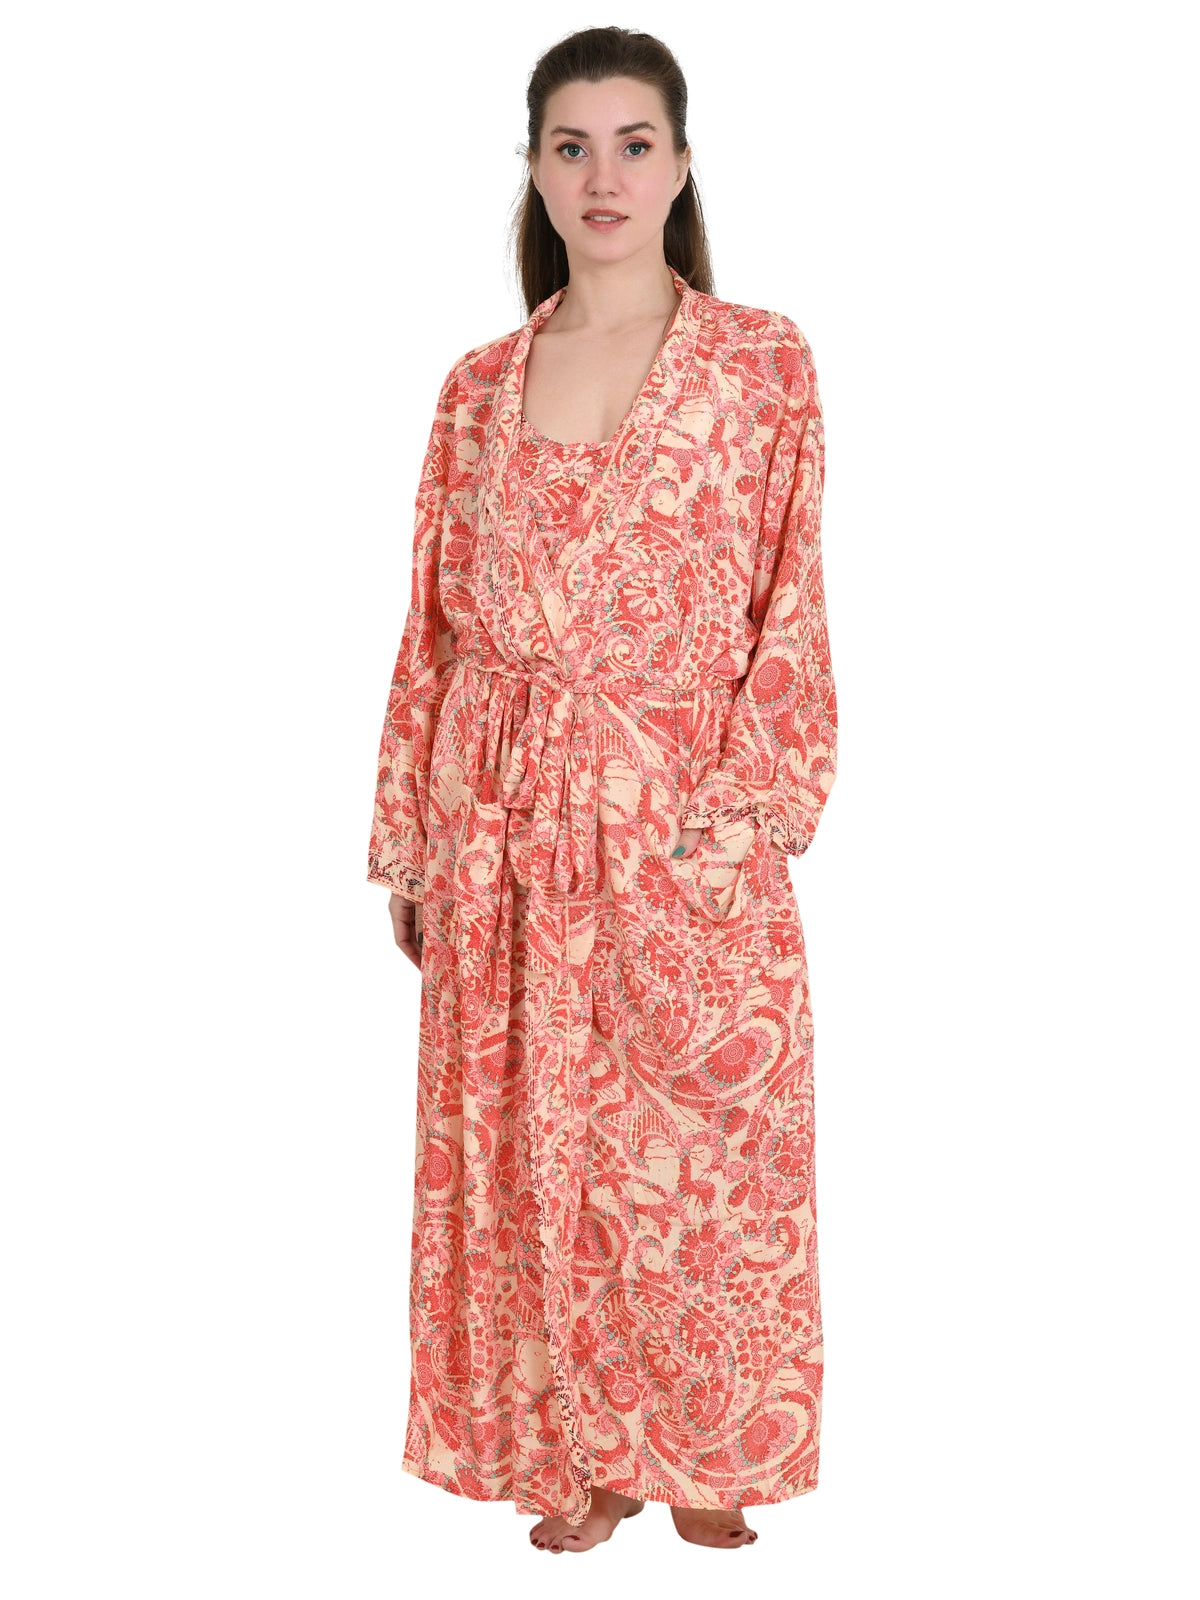 Silky Sari Pyjama Kimono Cami Top Boxer Set of 3 Night Suit Sleep Wear Luxury Lounge Boho Dress Royal Beach Cover Up Floral Paisley Cardigan Gift For Her